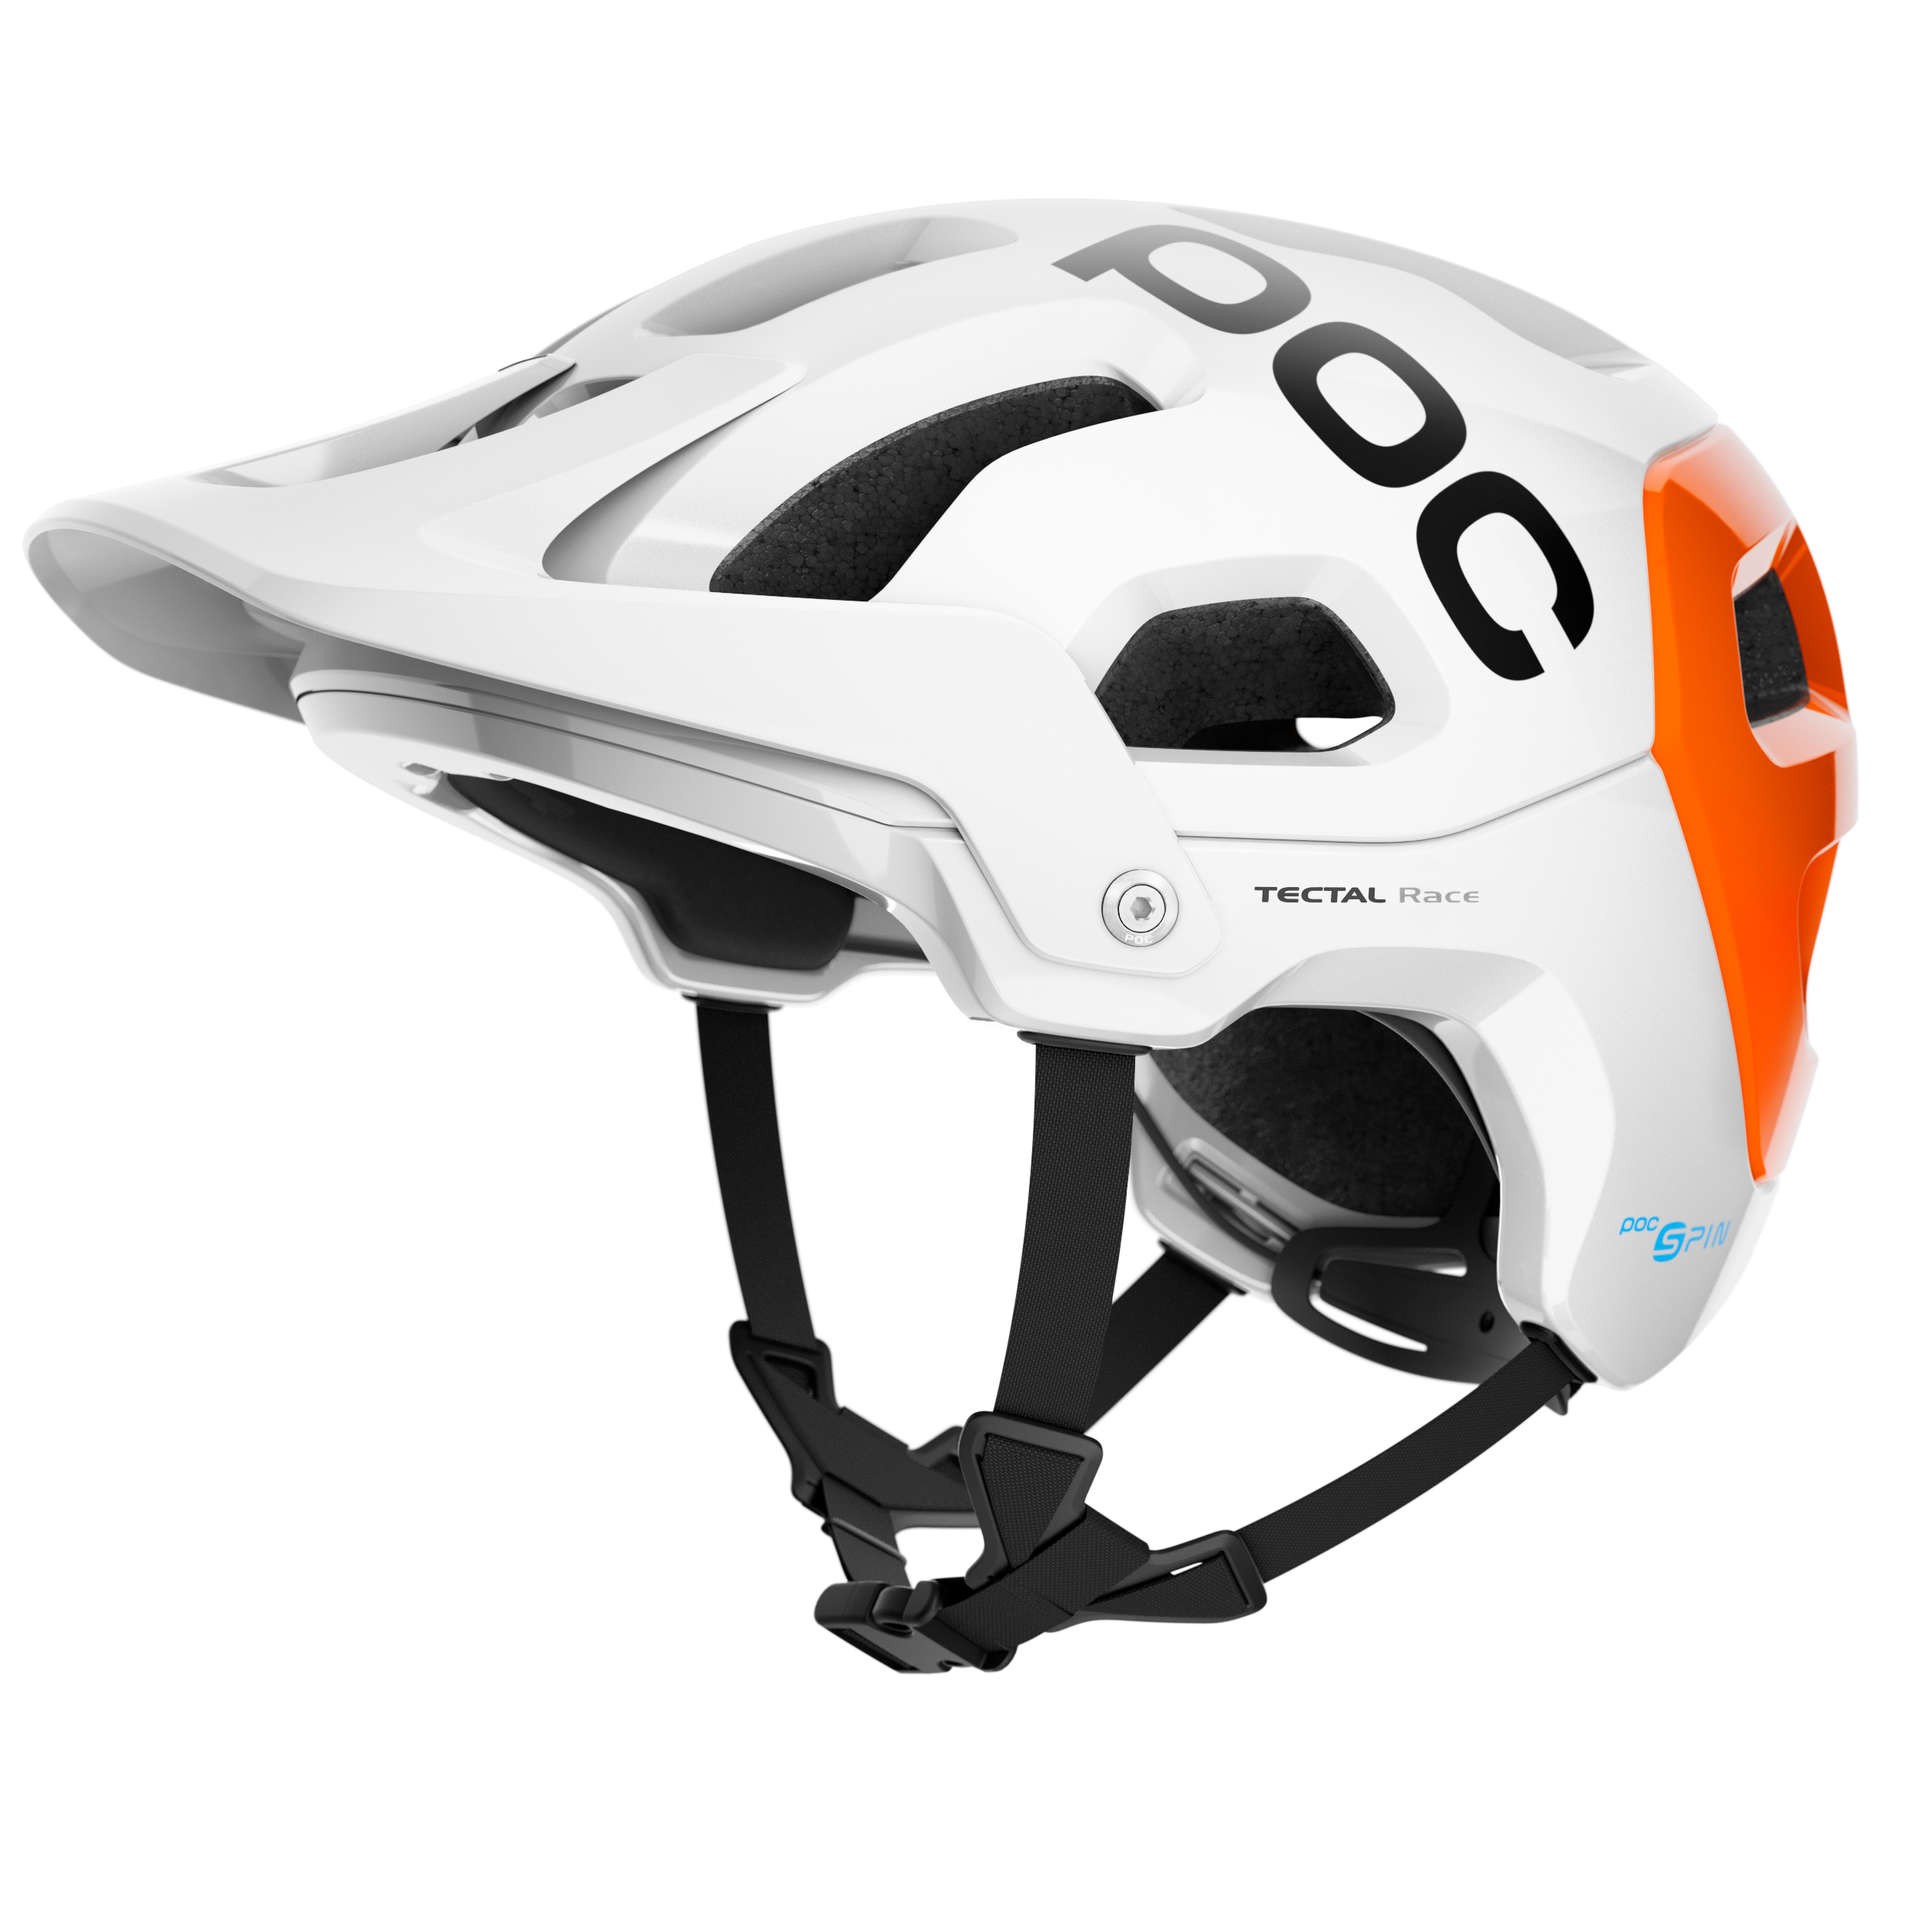 Poc tectal race spin nfc casque de cyclisme hydrogen blanc fluorescent orange avip